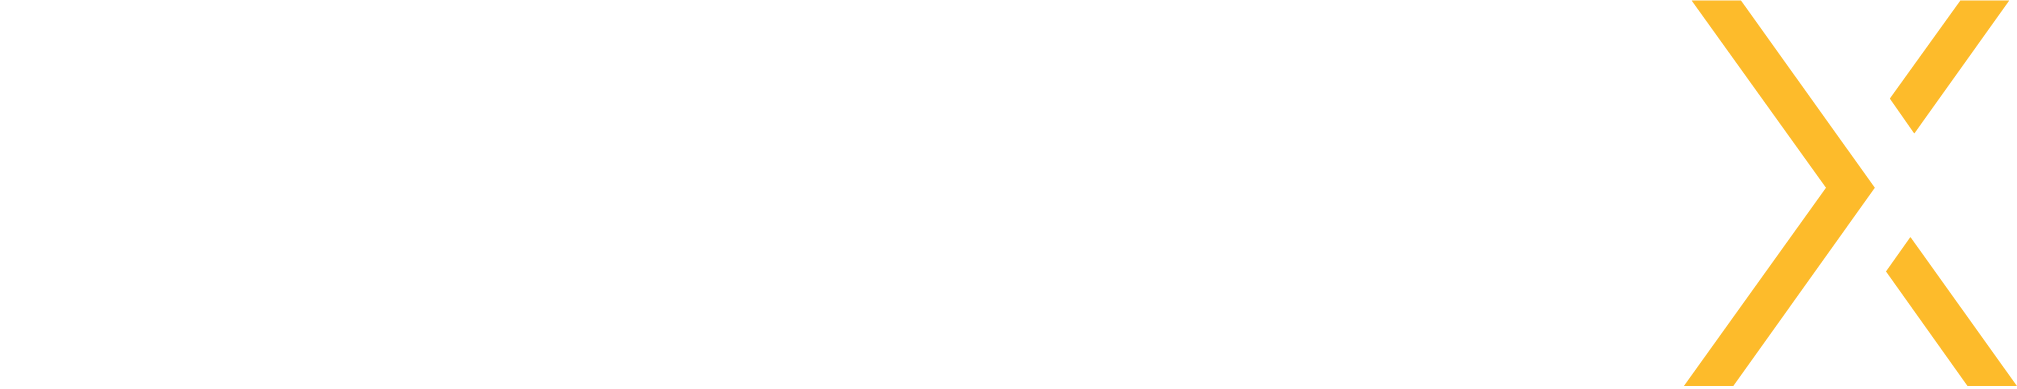 cyberx_logo